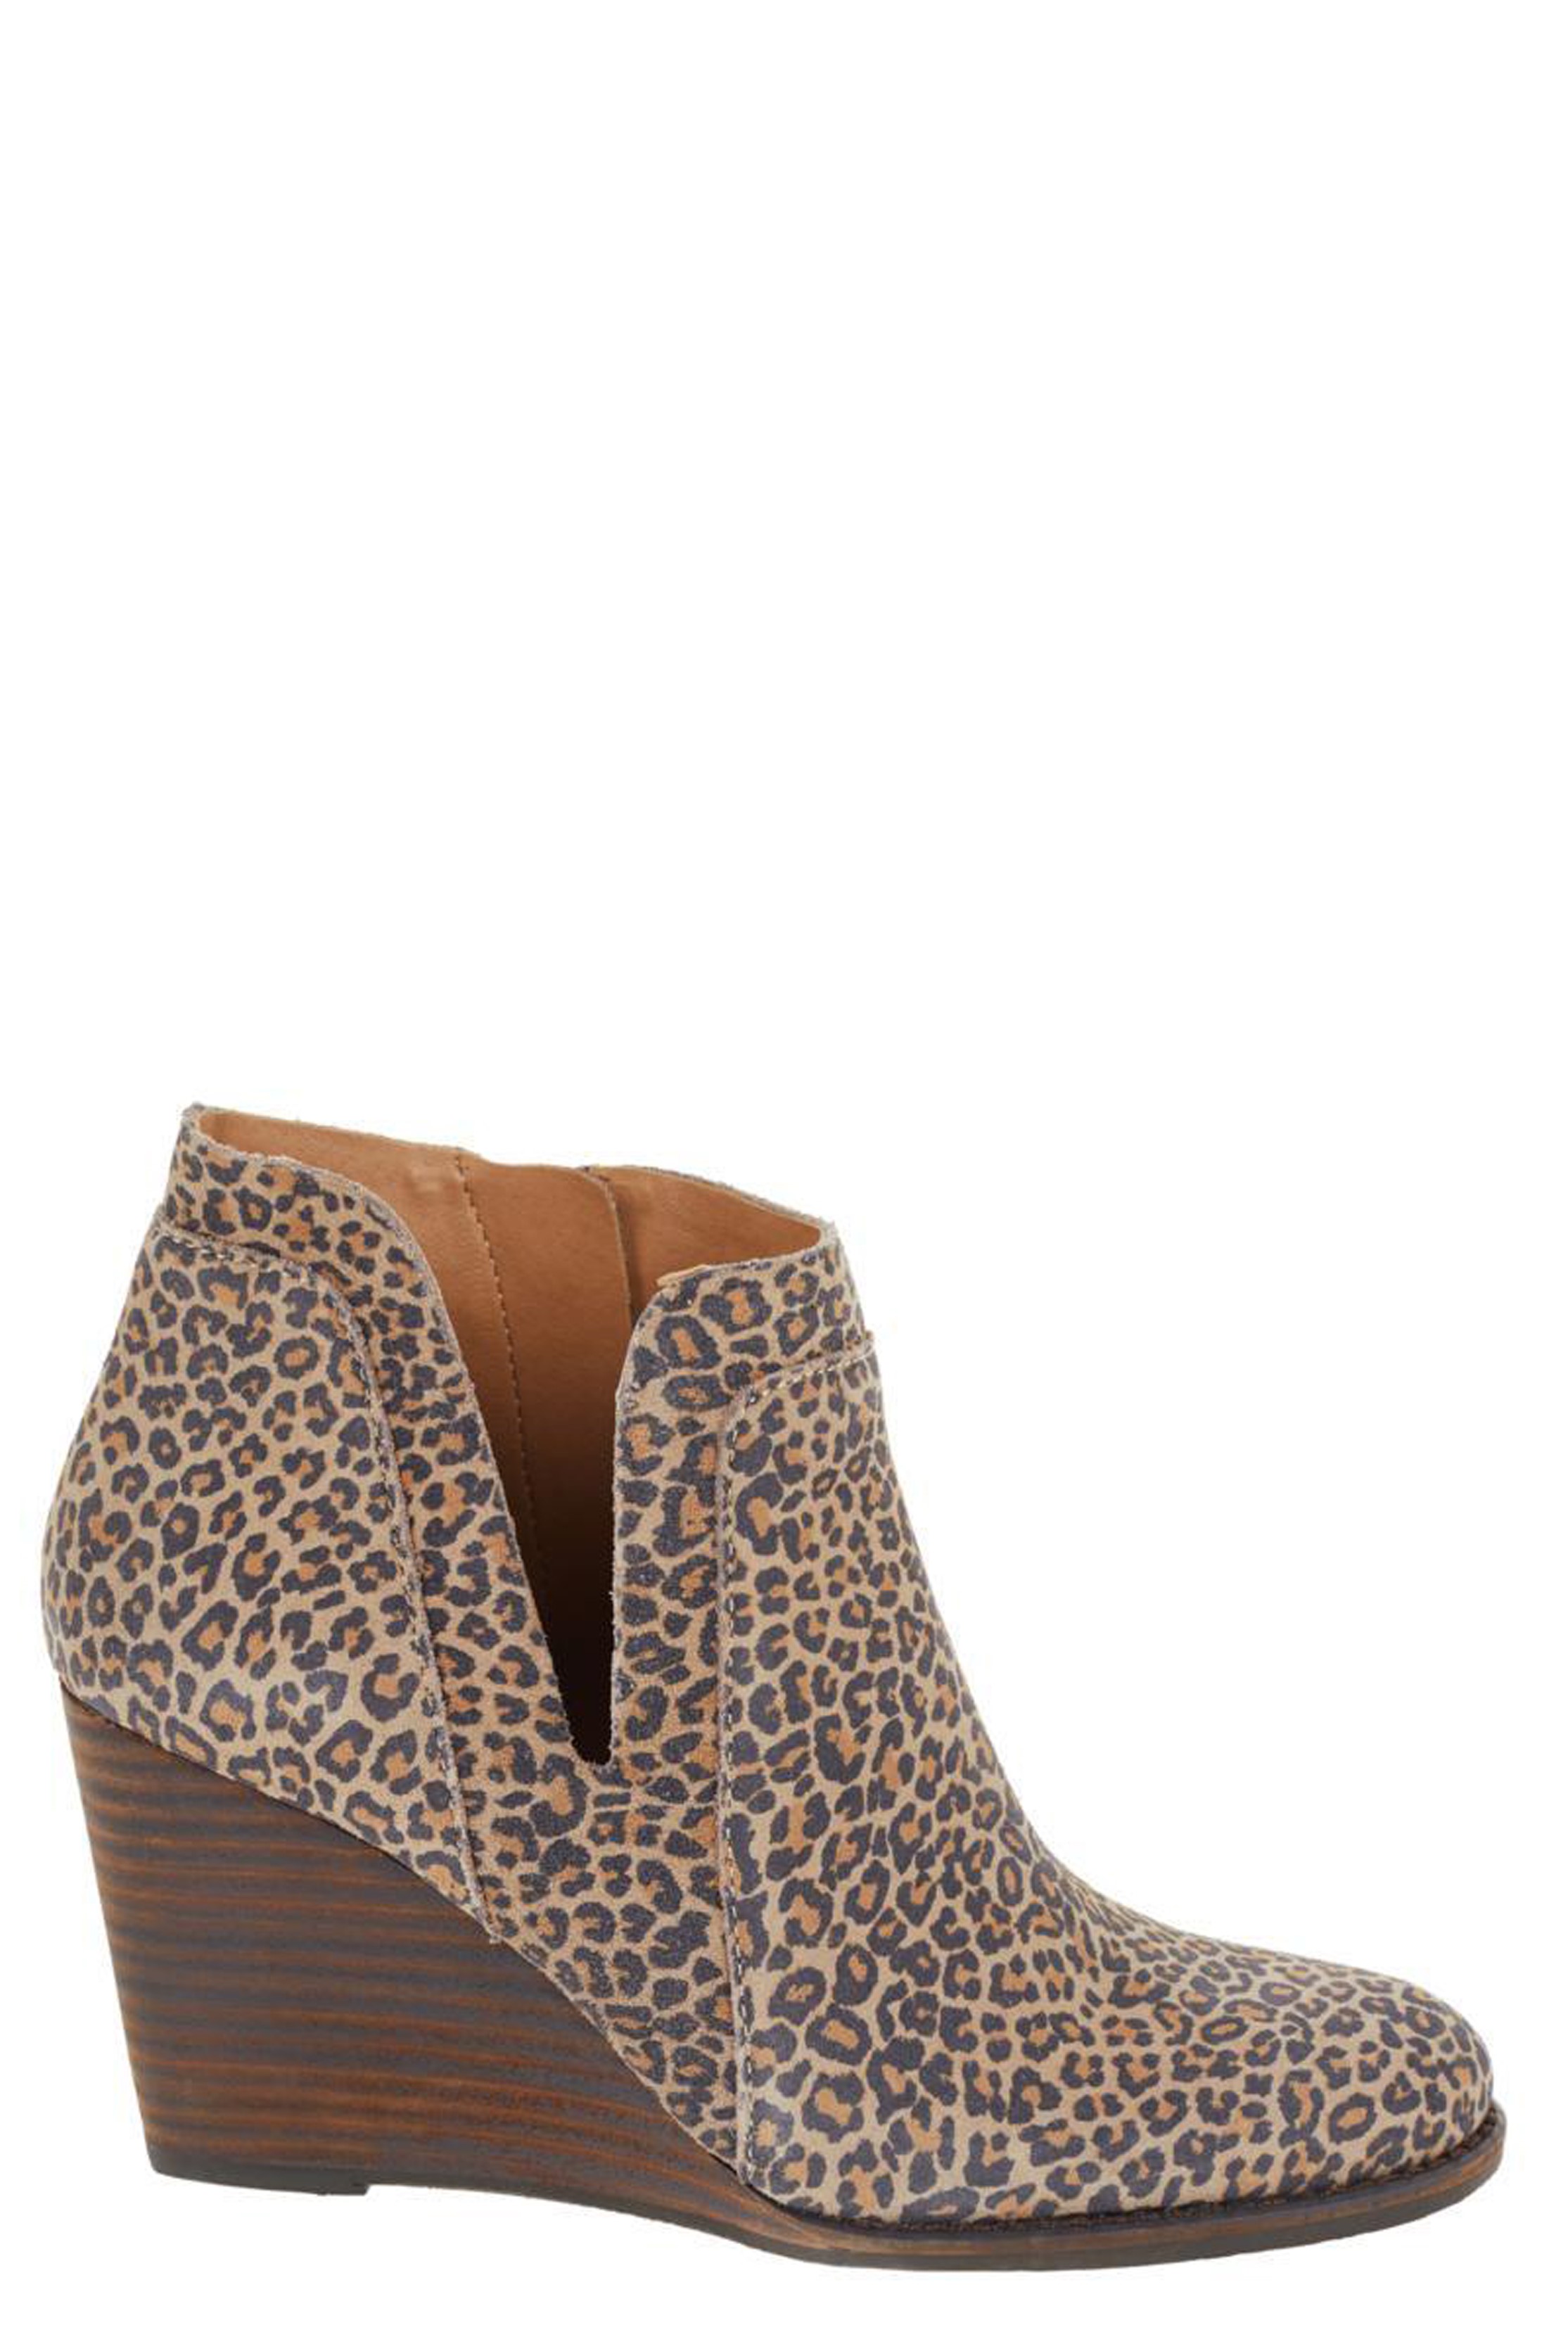 lucky brand leopard boots